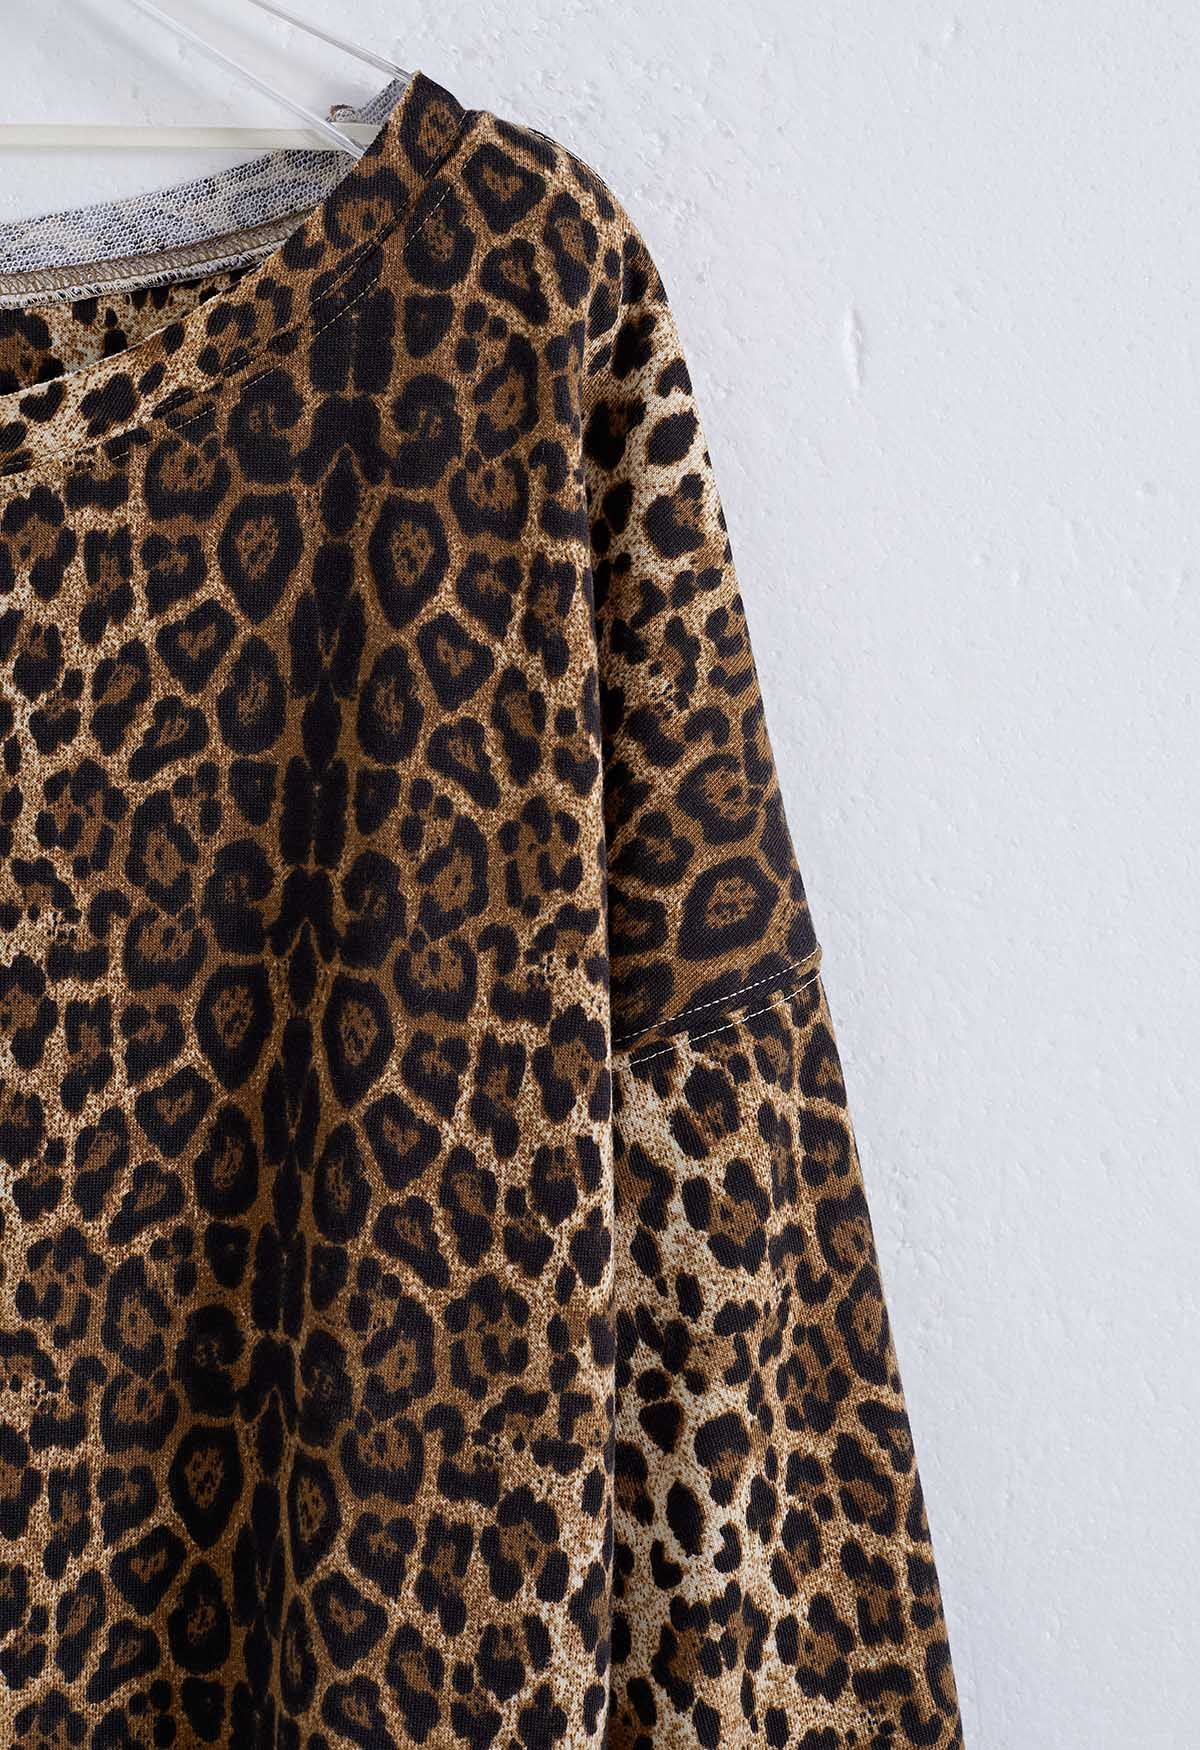 Leopard Print Boat Neck Sweatshirt